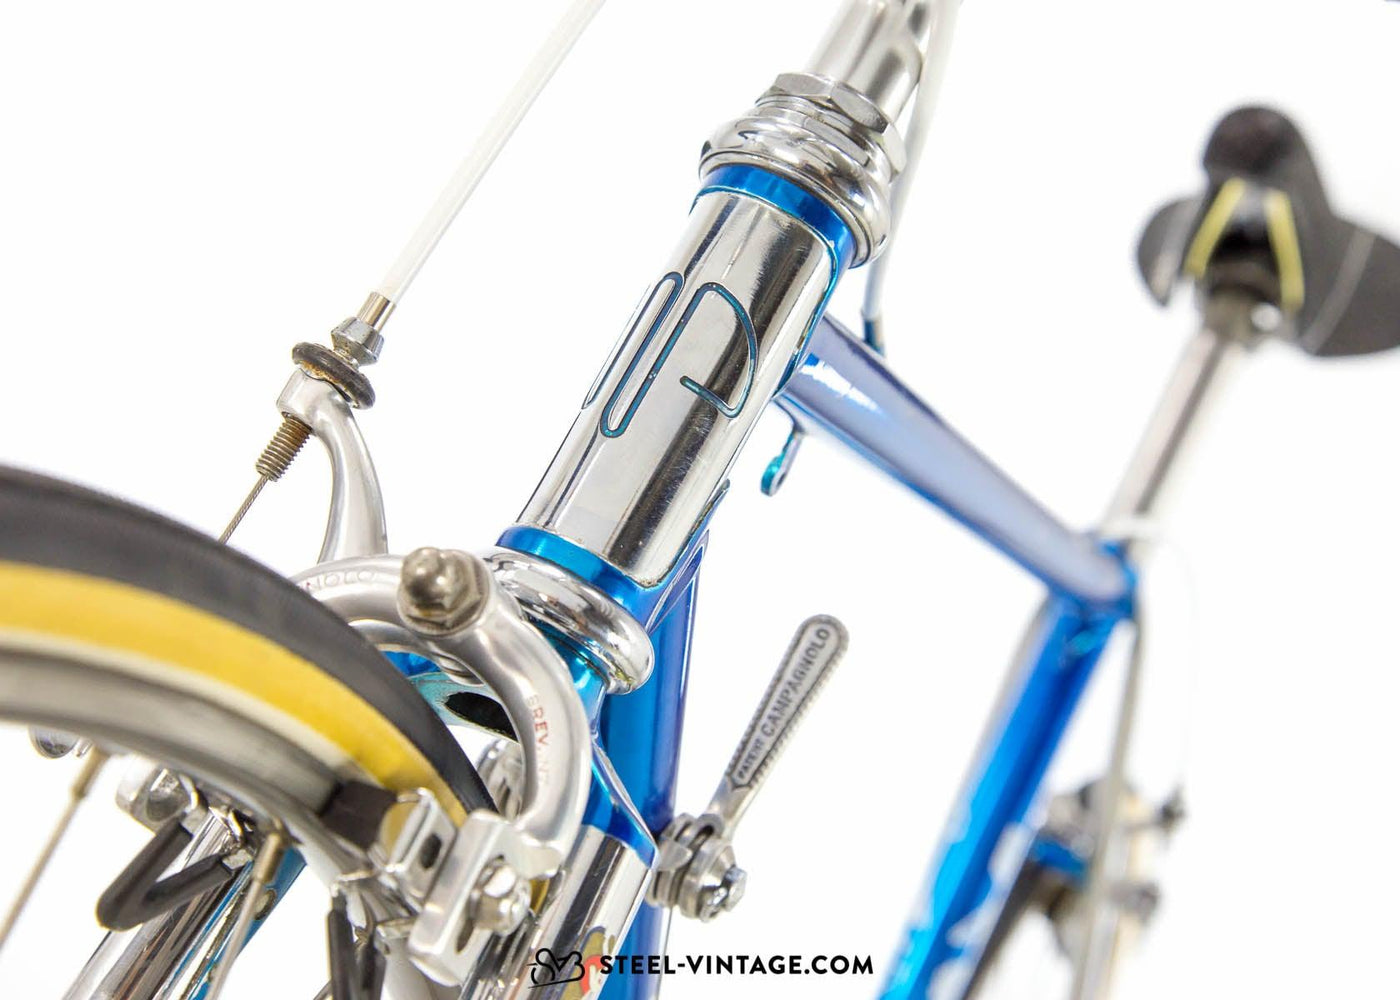 Paganini Blue Cromovelato Classic Bicycle 1980s - Steel Vintage Bikes